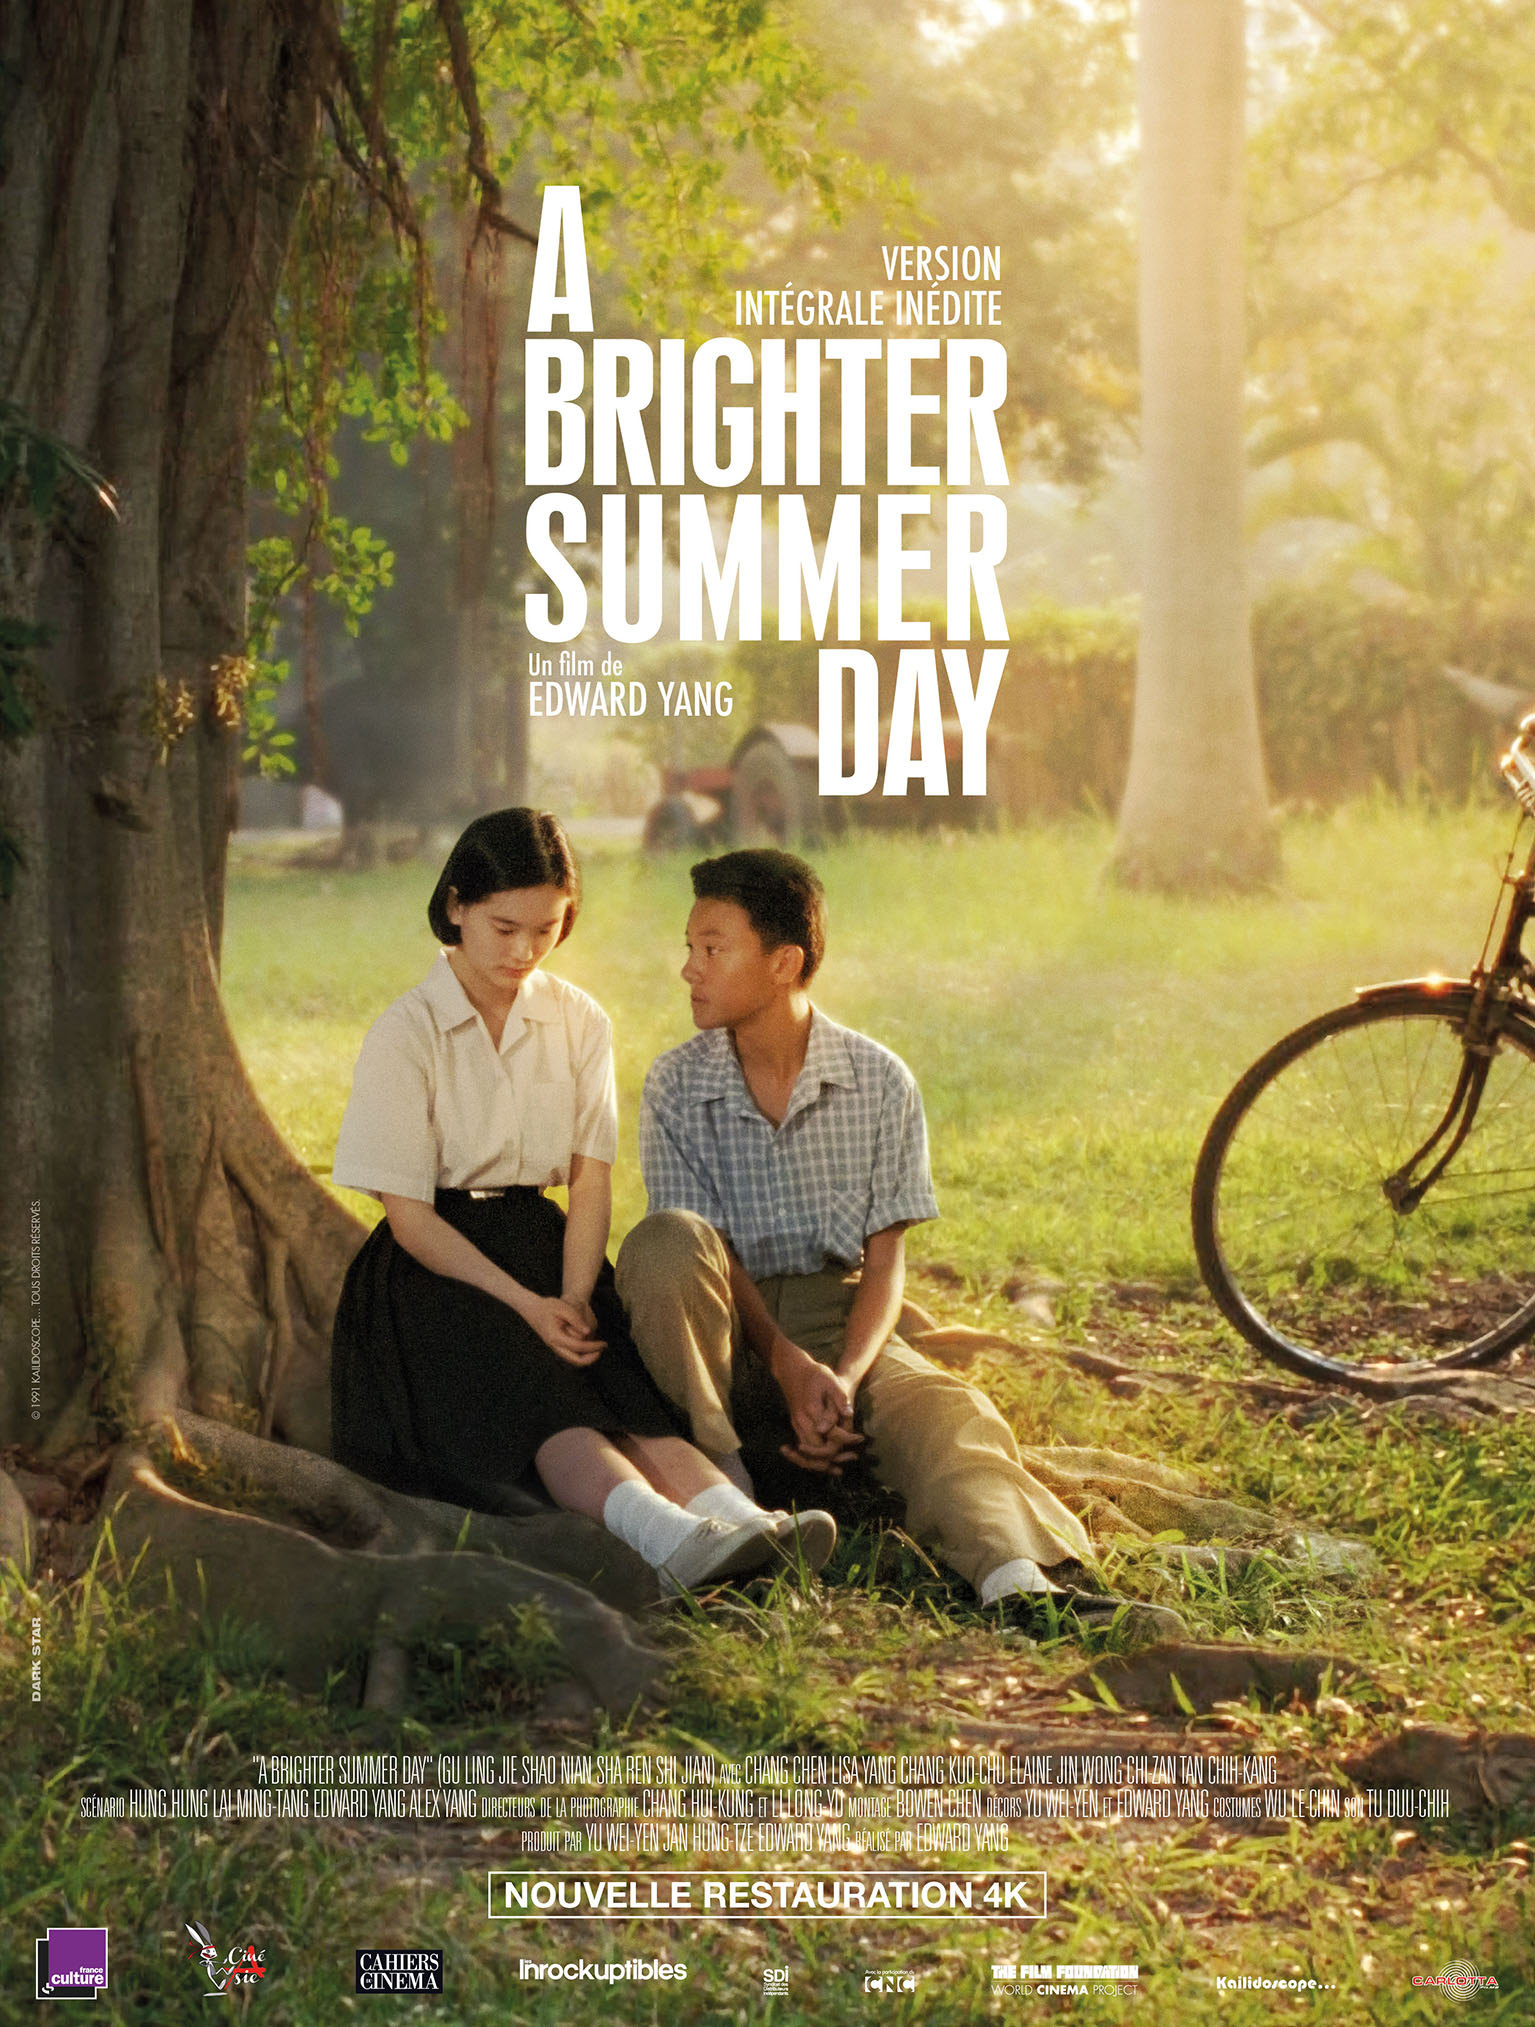 A Brighter Summer Day d’Edward Yang ressort en salles en version intégrale inédite.